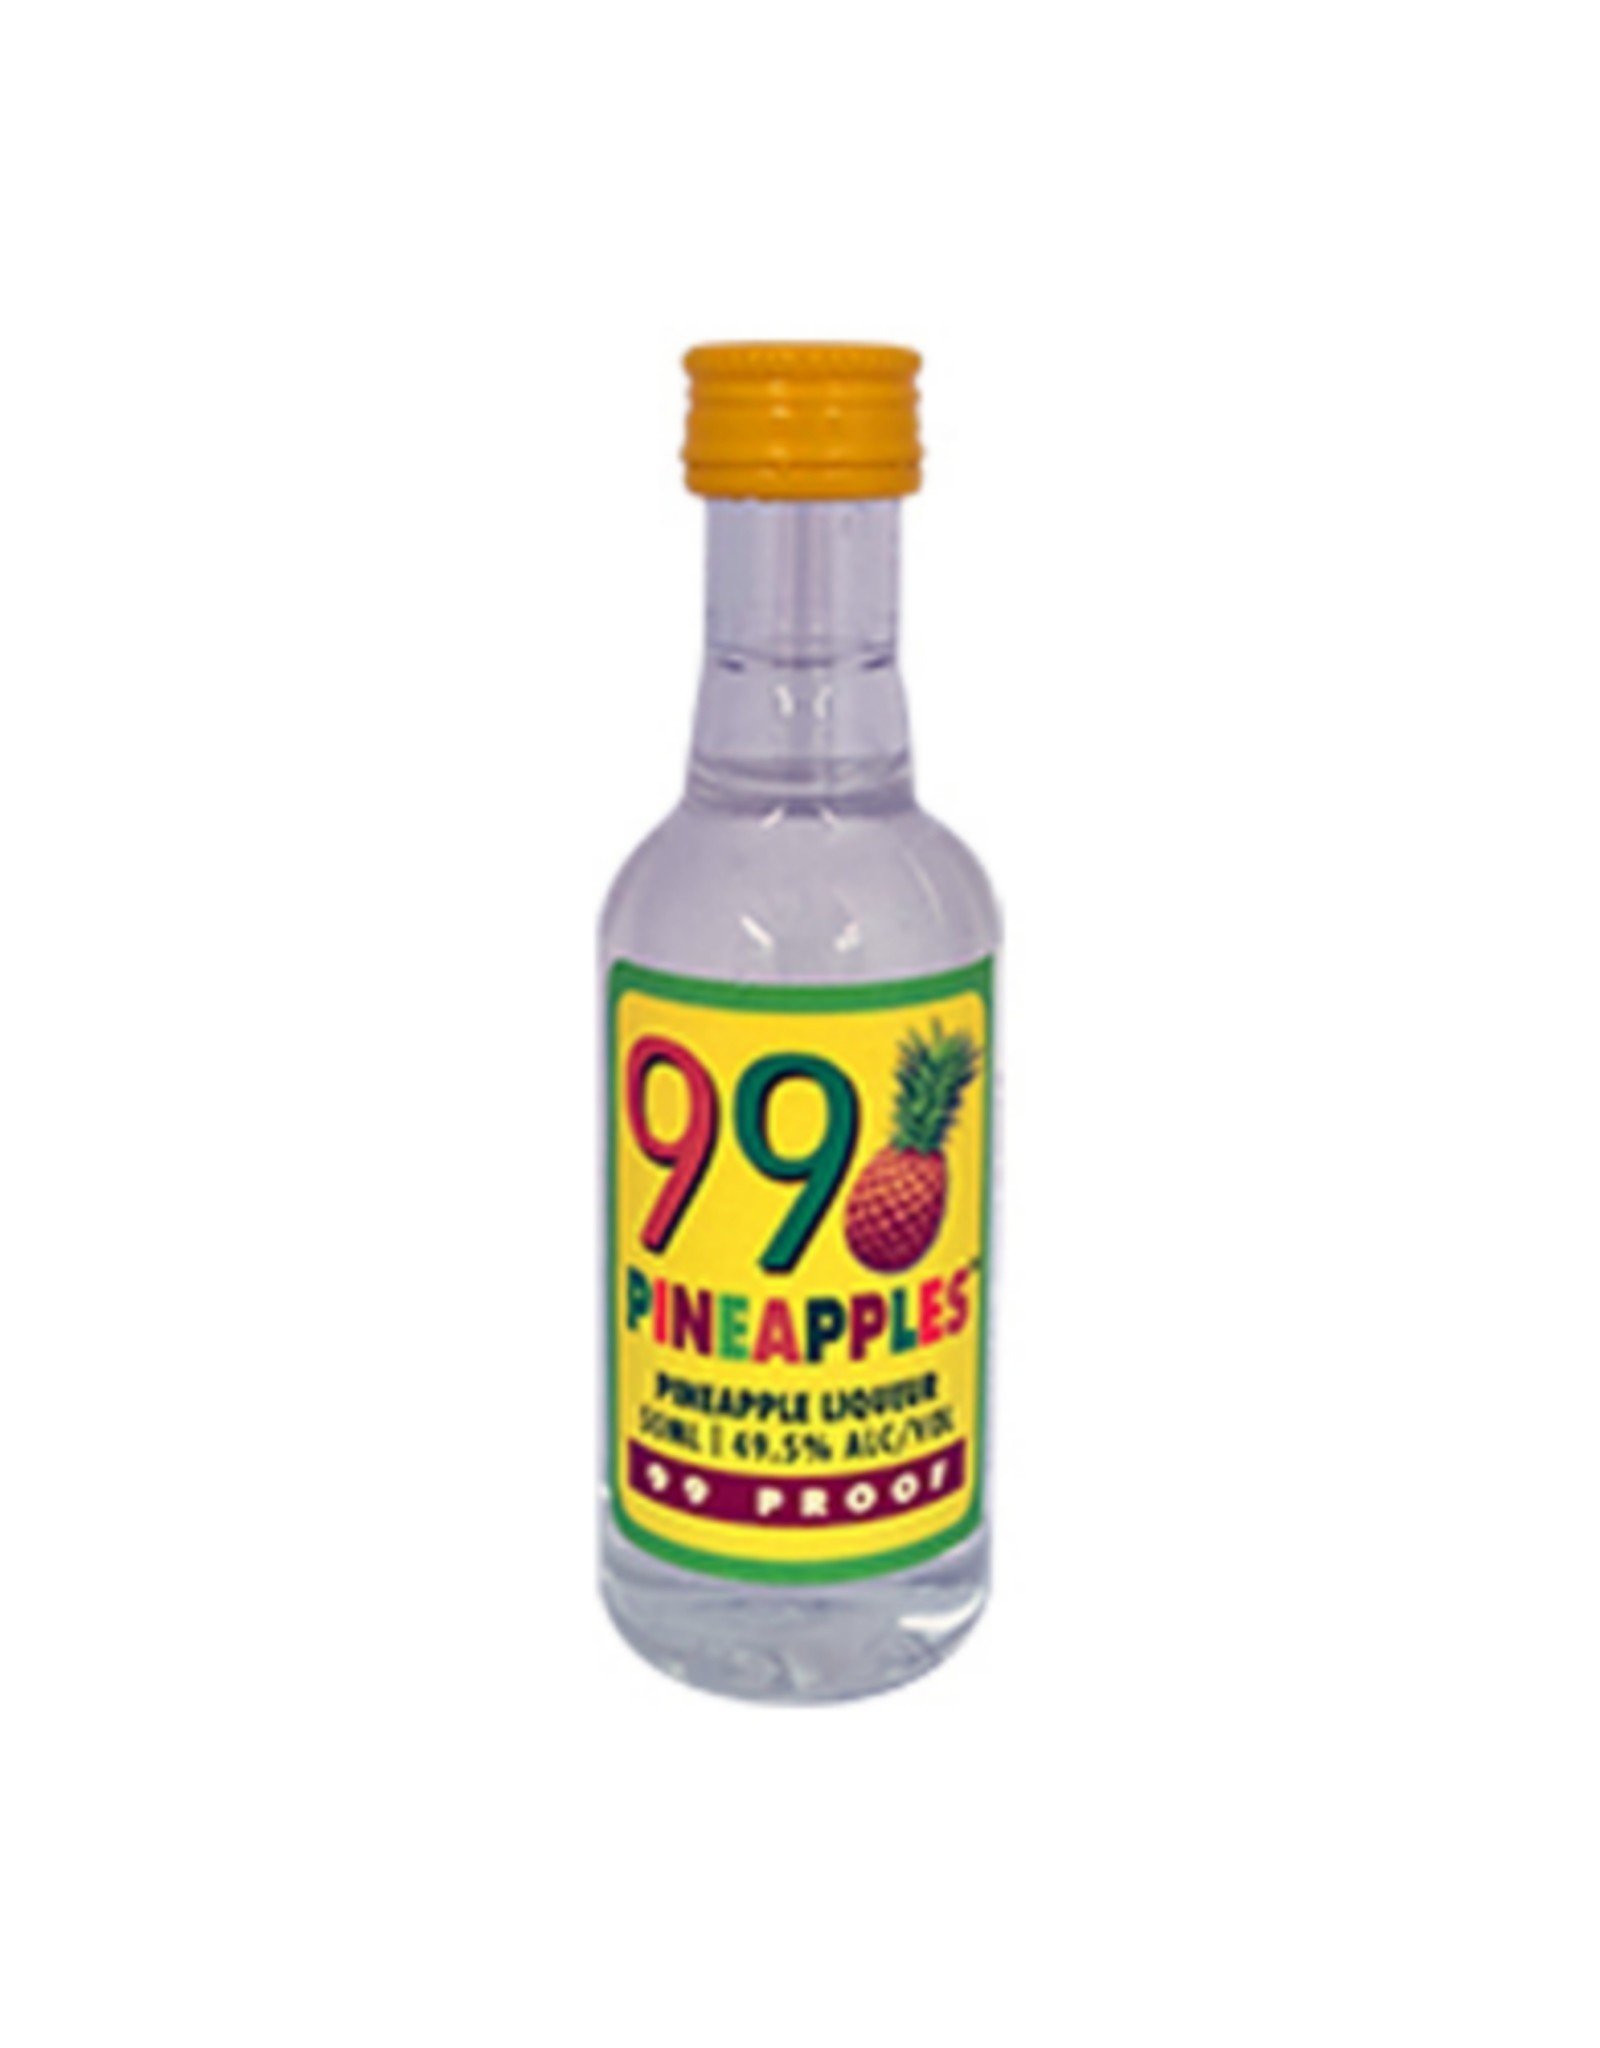 99 99 - PINEAPPLE - SCHNAPPS - 99 PR - 50 ML